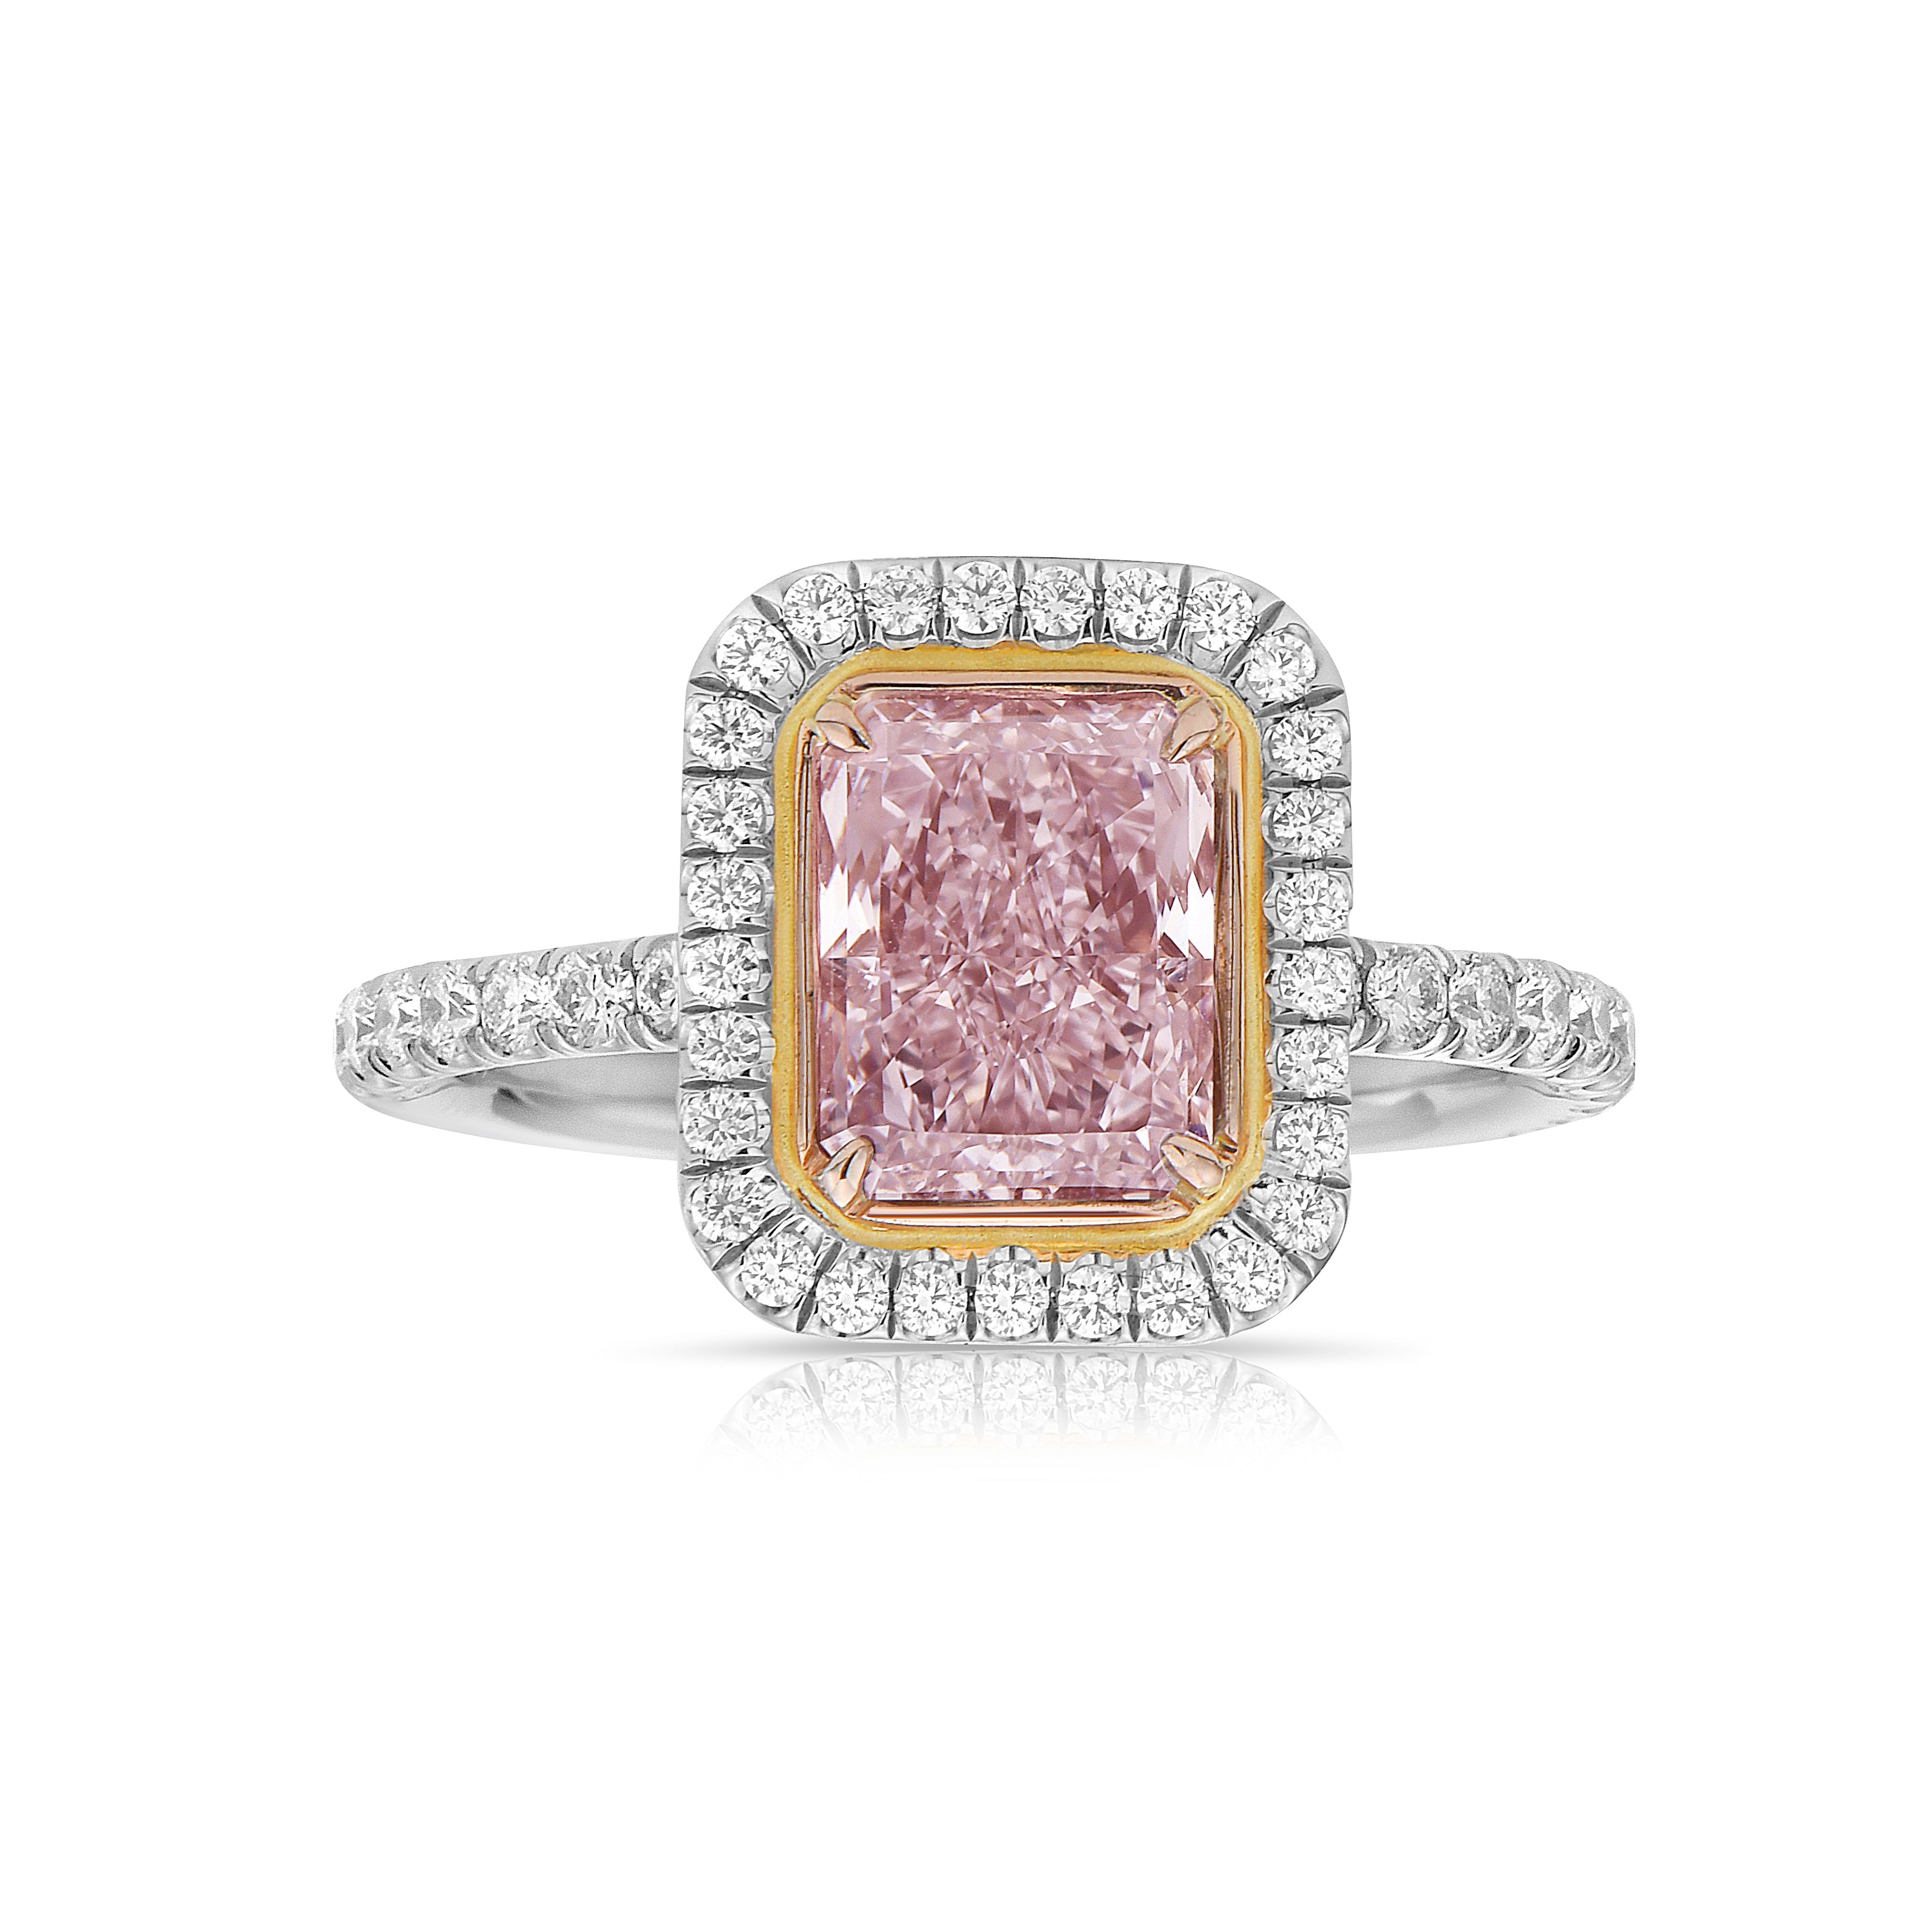 1.60ct Very Light Pink - IF (Internally Flawless) Diamond Ring